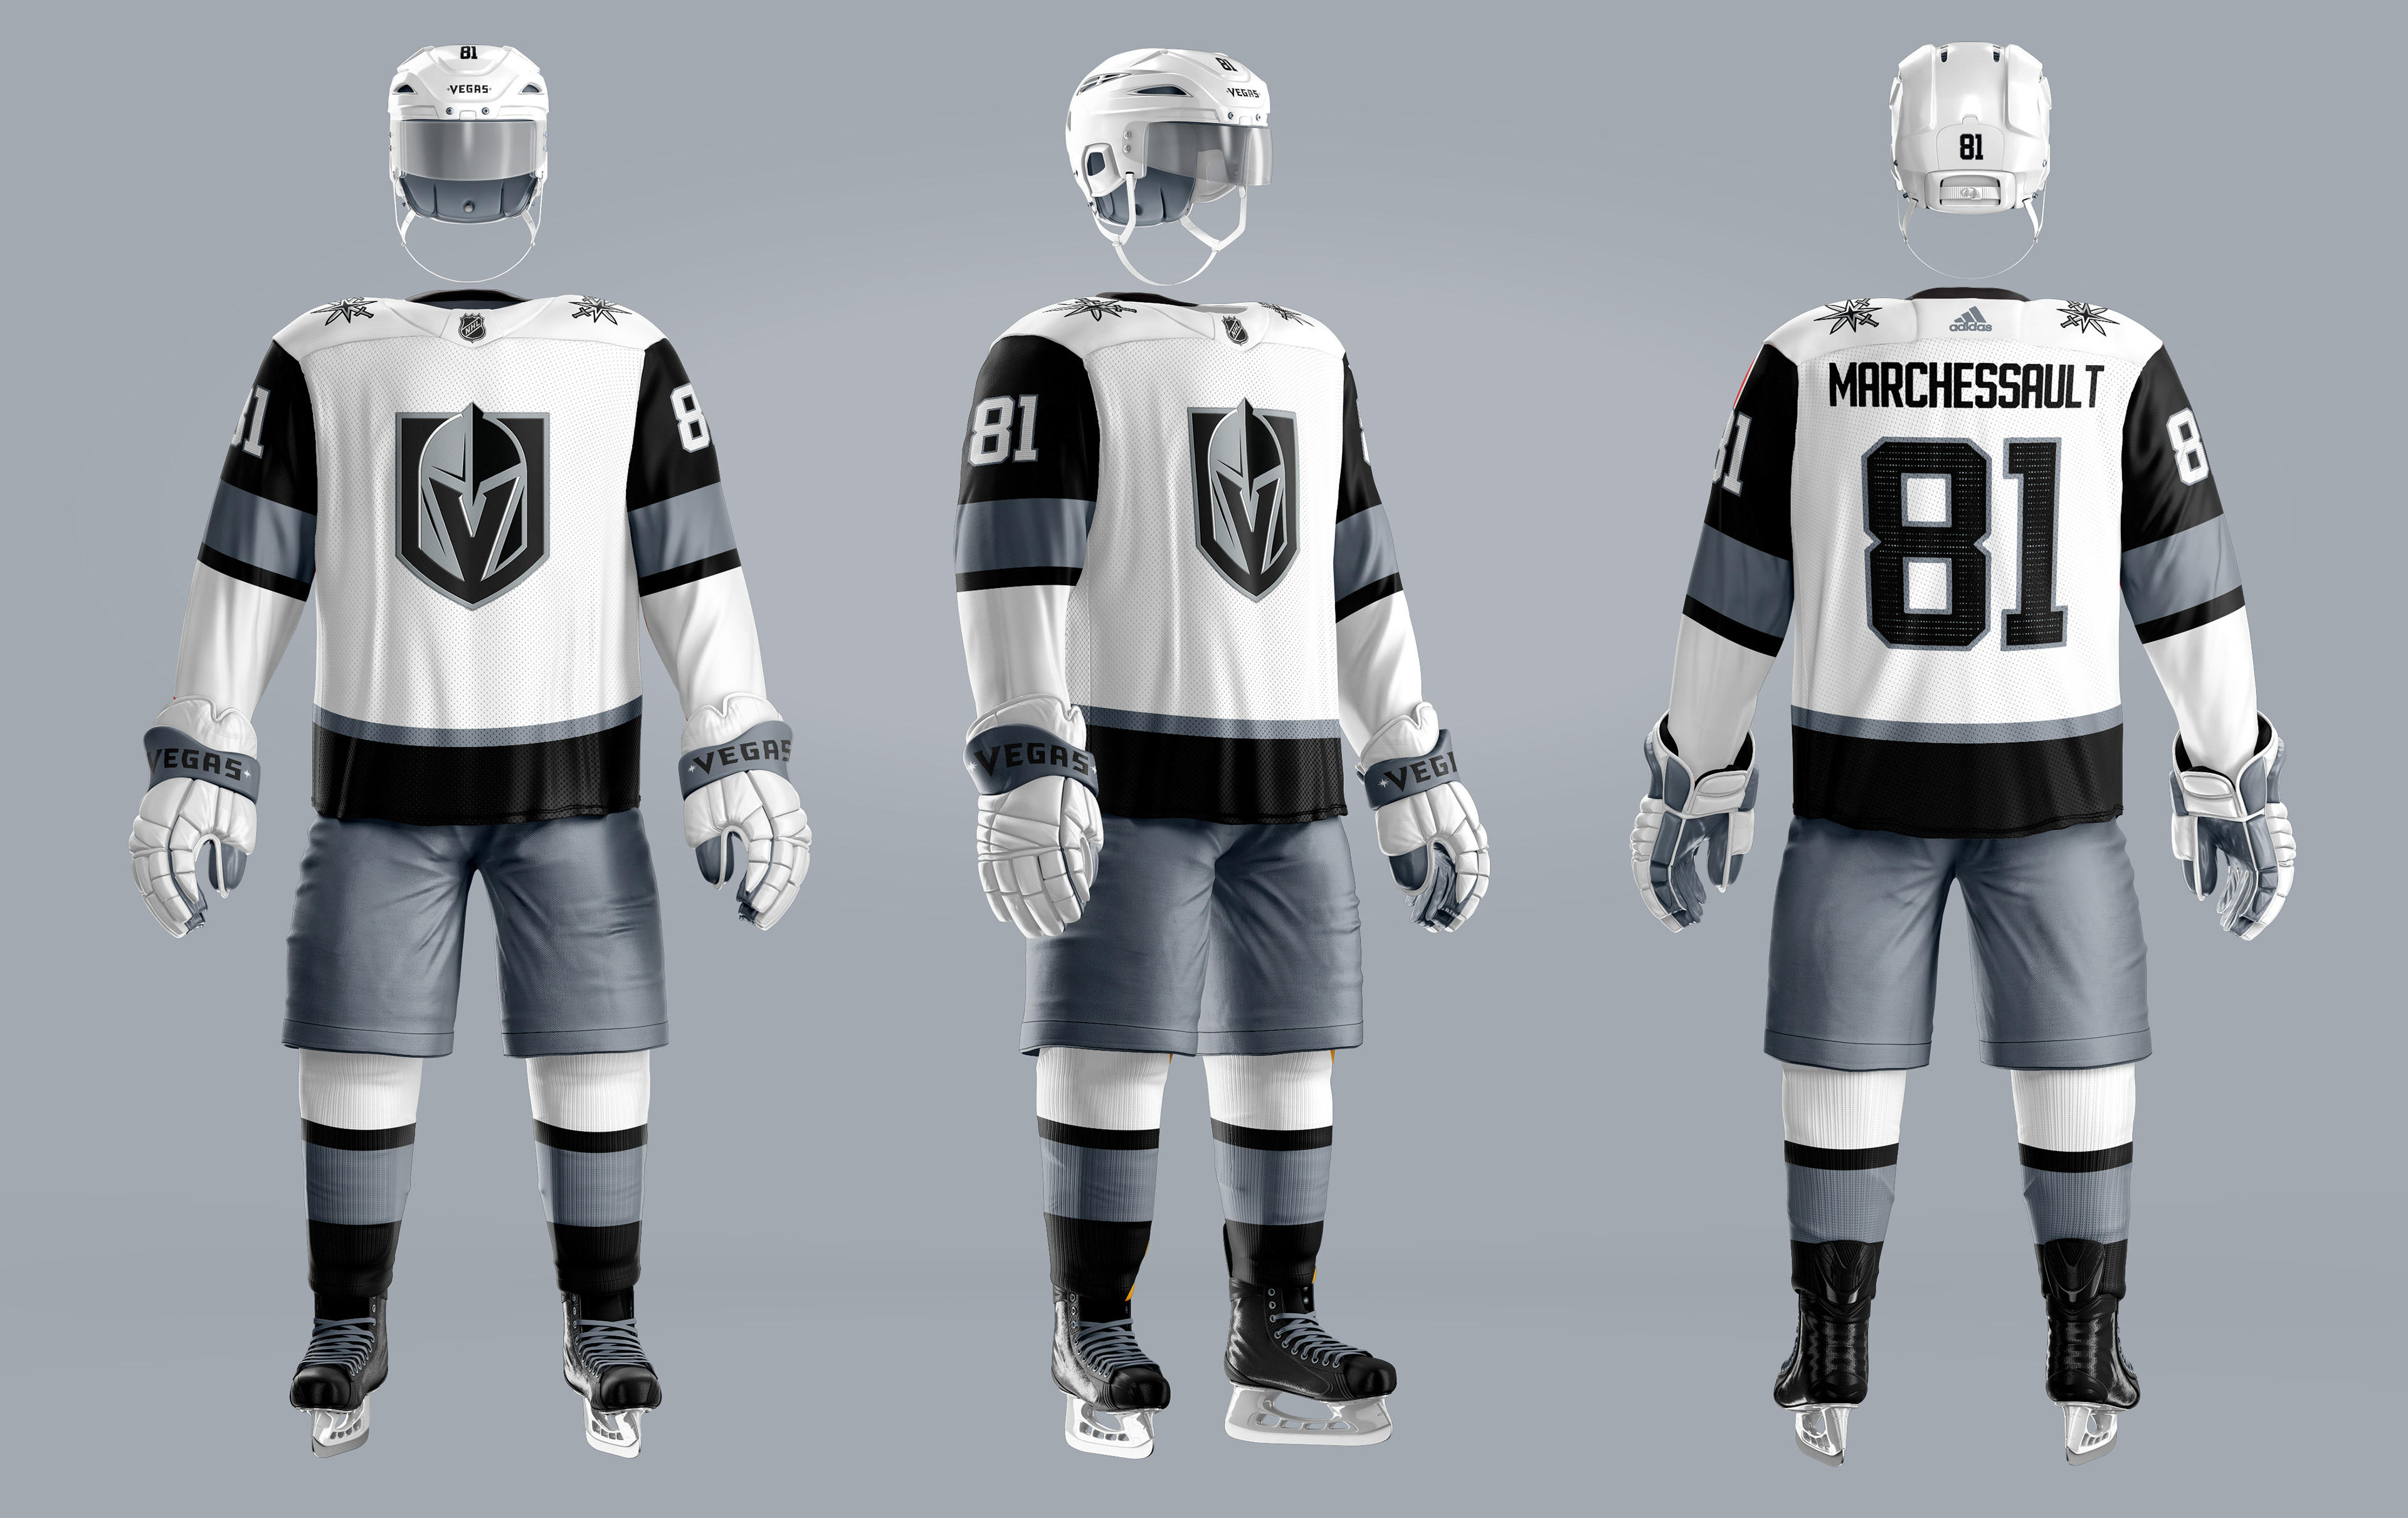 Chris Ramirez on X: LA Kings third jersey concept featuring the